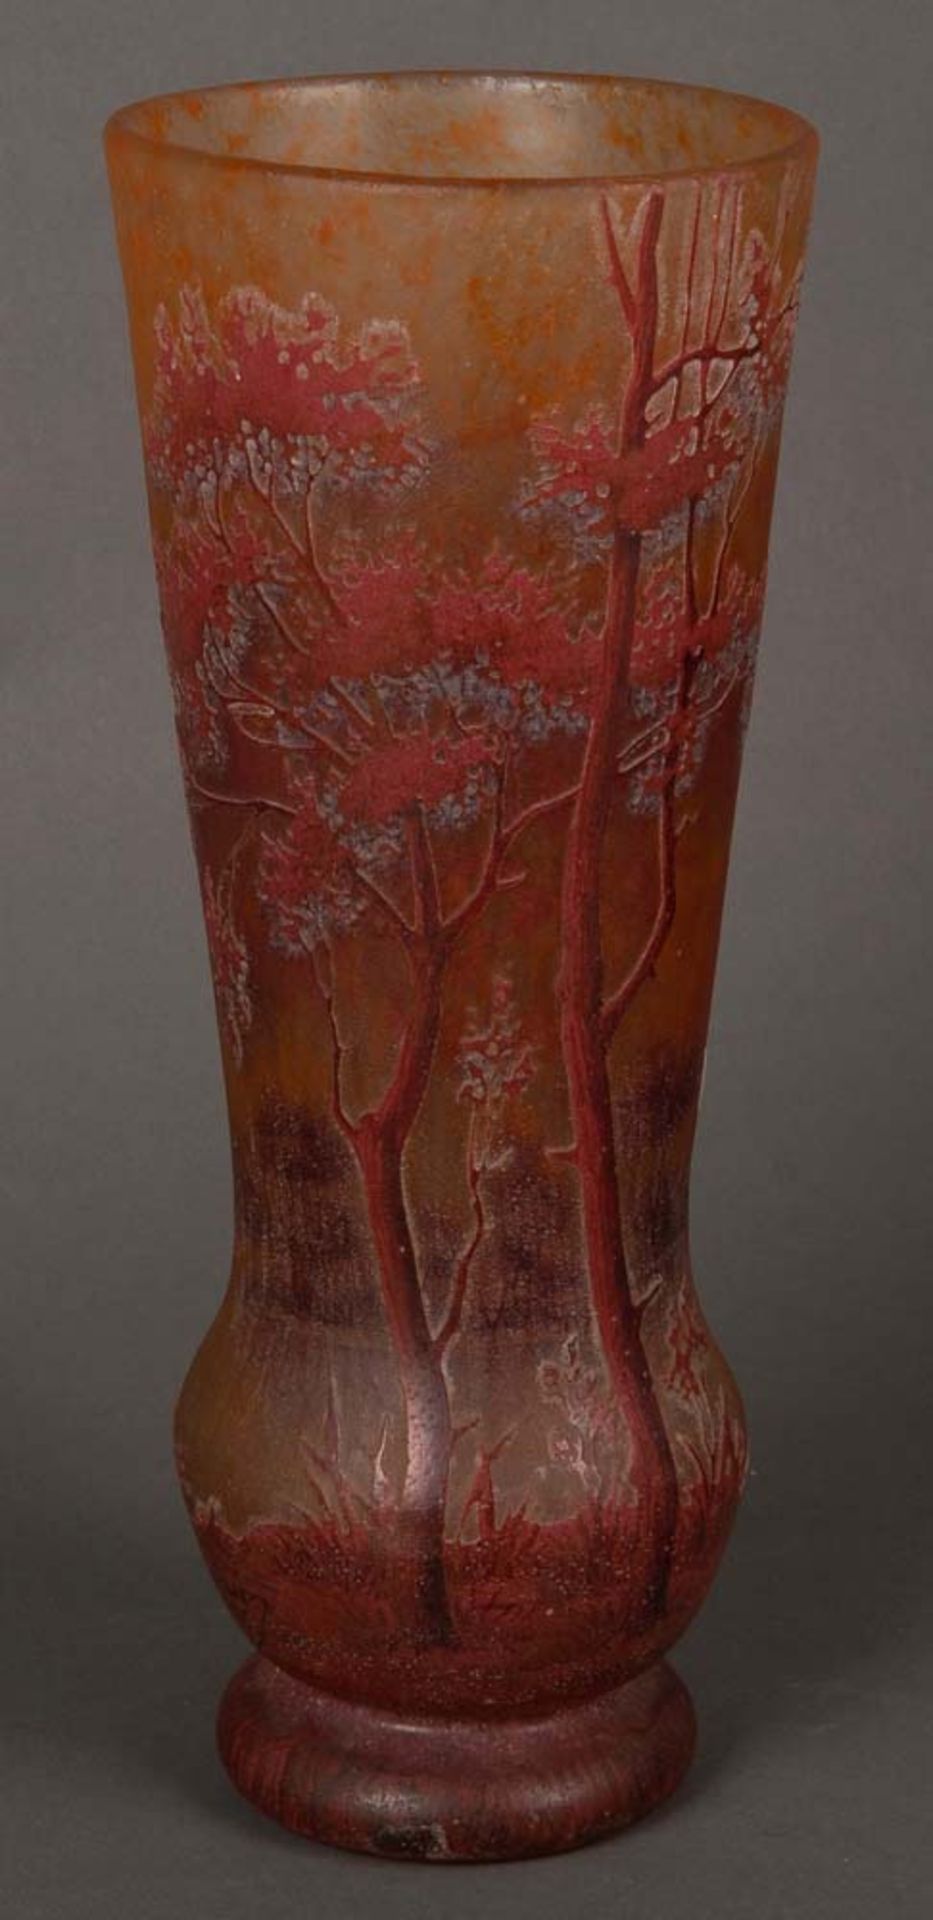 Jugendstil-Vase. Daum Frères & Cie, Verreries de Nancy 1900-1905. Farbloses Glas, farbig überfangen, - Bild 2 aus 3